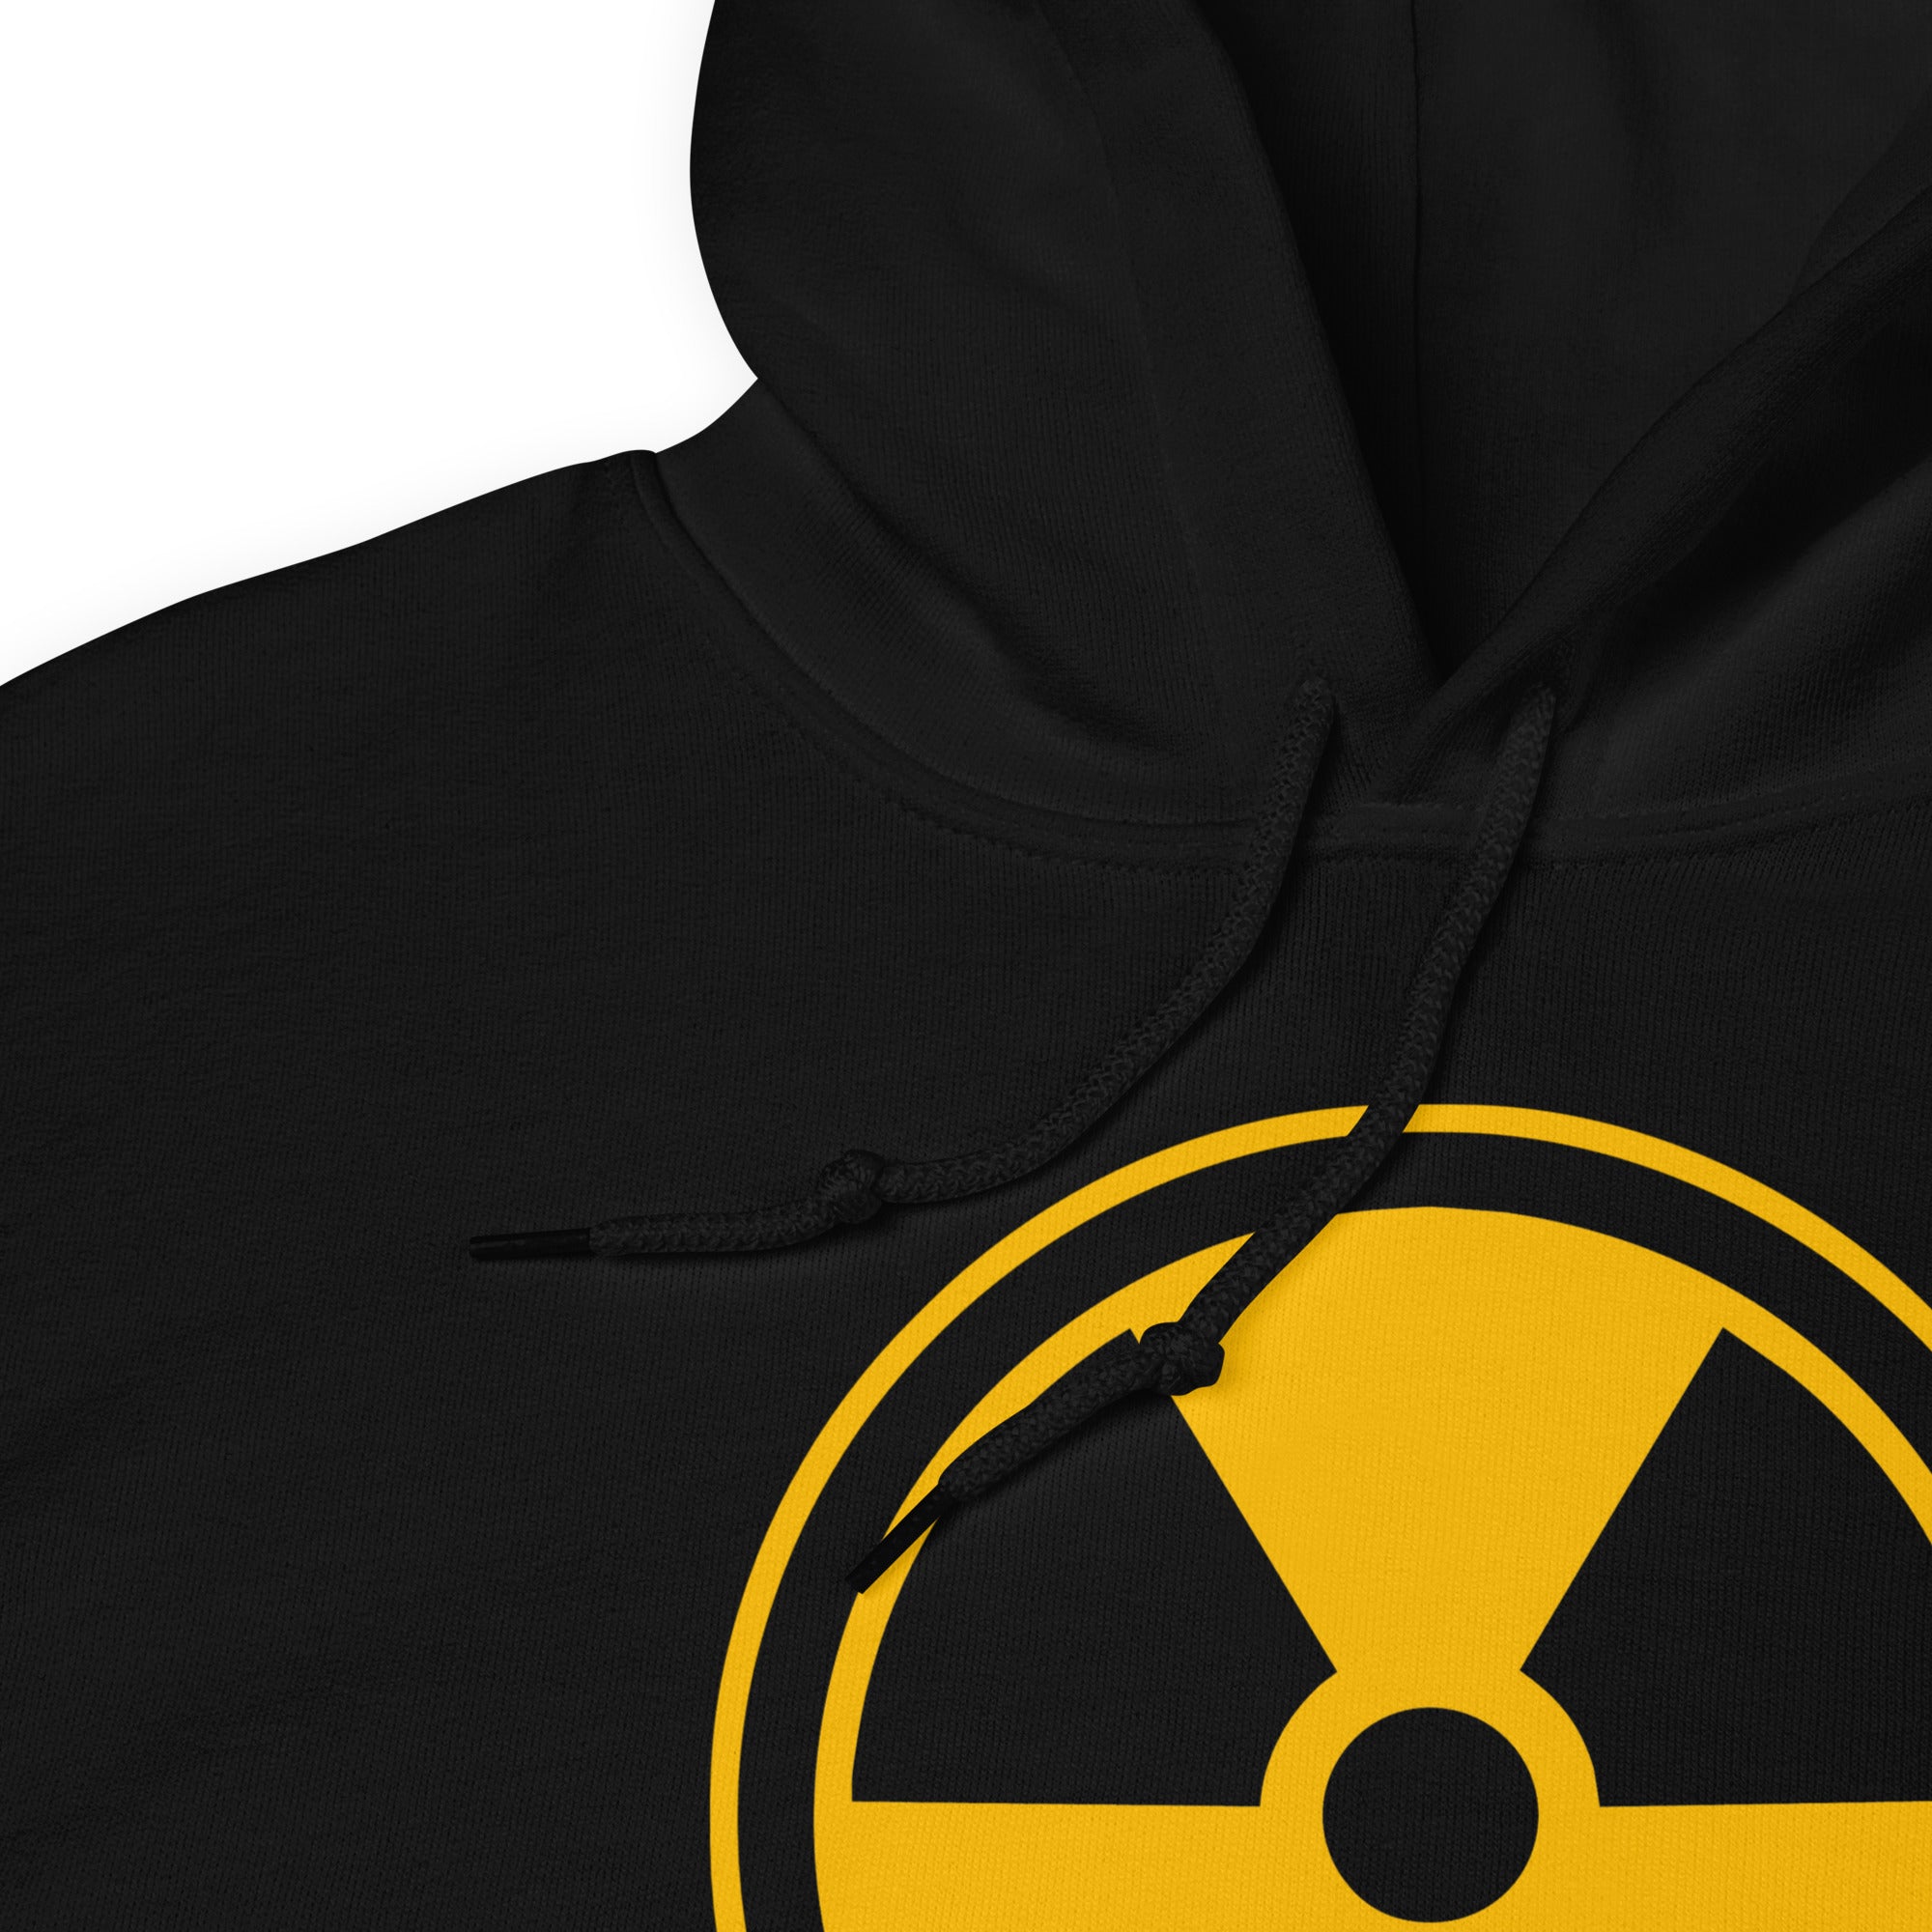 Yellow Radioactive Radiation Warning Sign Hoodie Sweatshirt